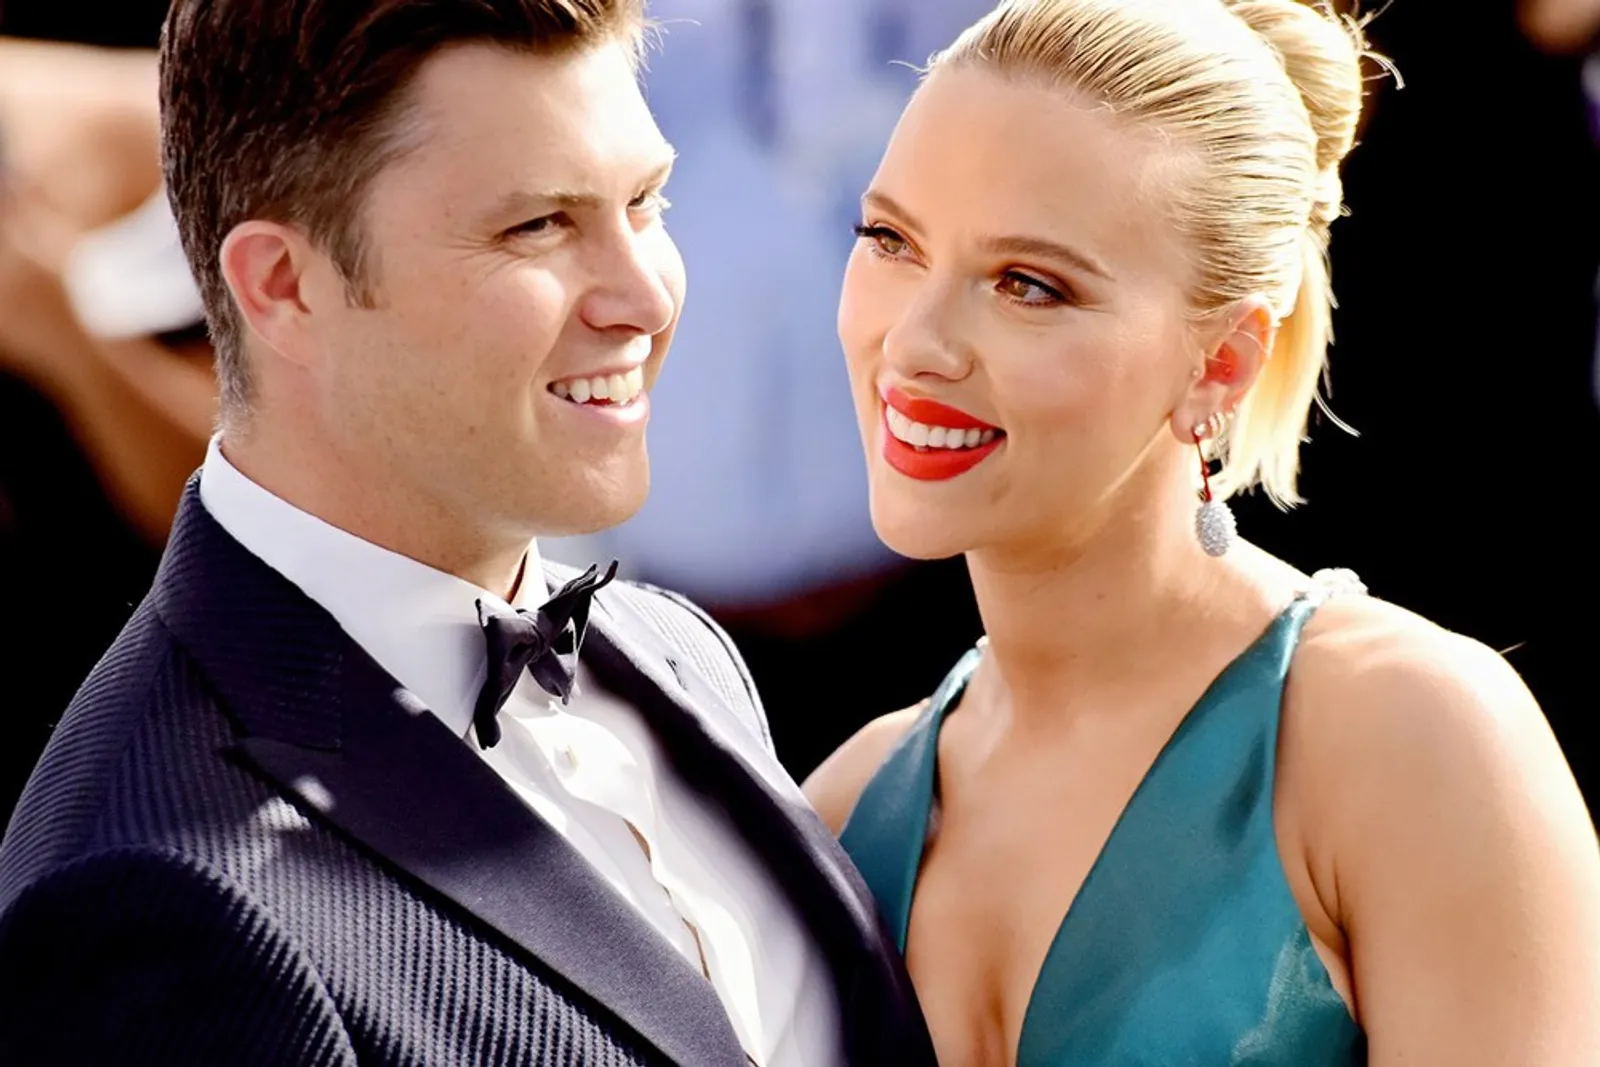 Resmi Menikah, Ini 5 Fakta Hubungan Scarlett Johansson & Colin Jost